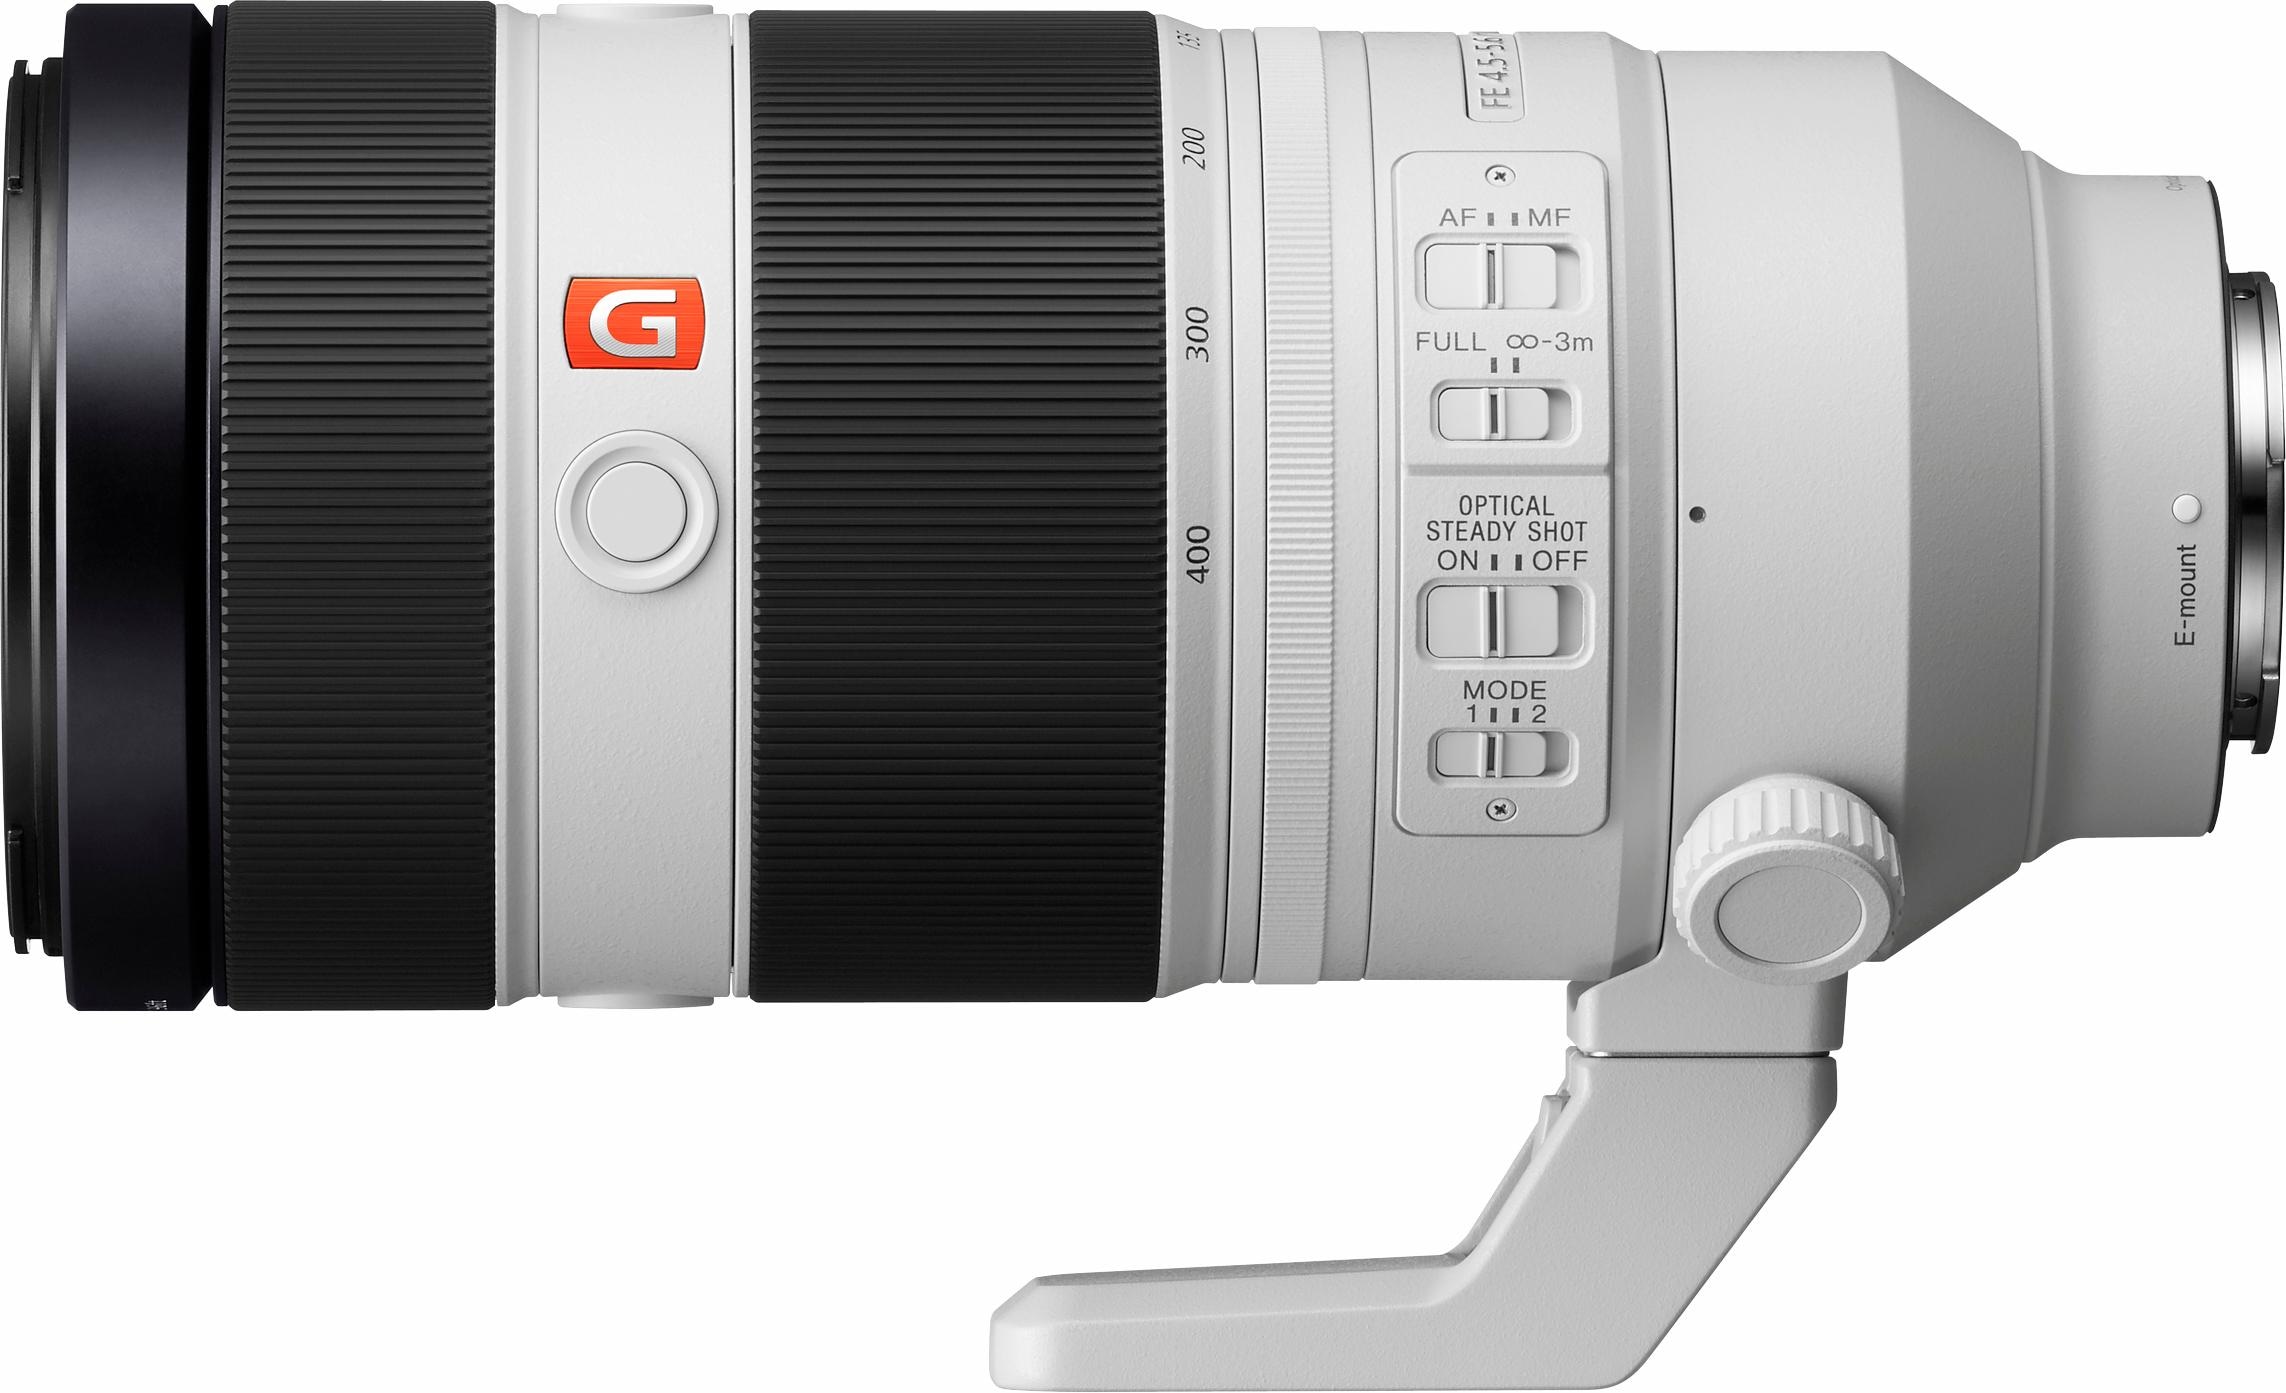 Sony Teleobjektiv »100-400mm f4.5-5.6 GM OSS FE-Mount«